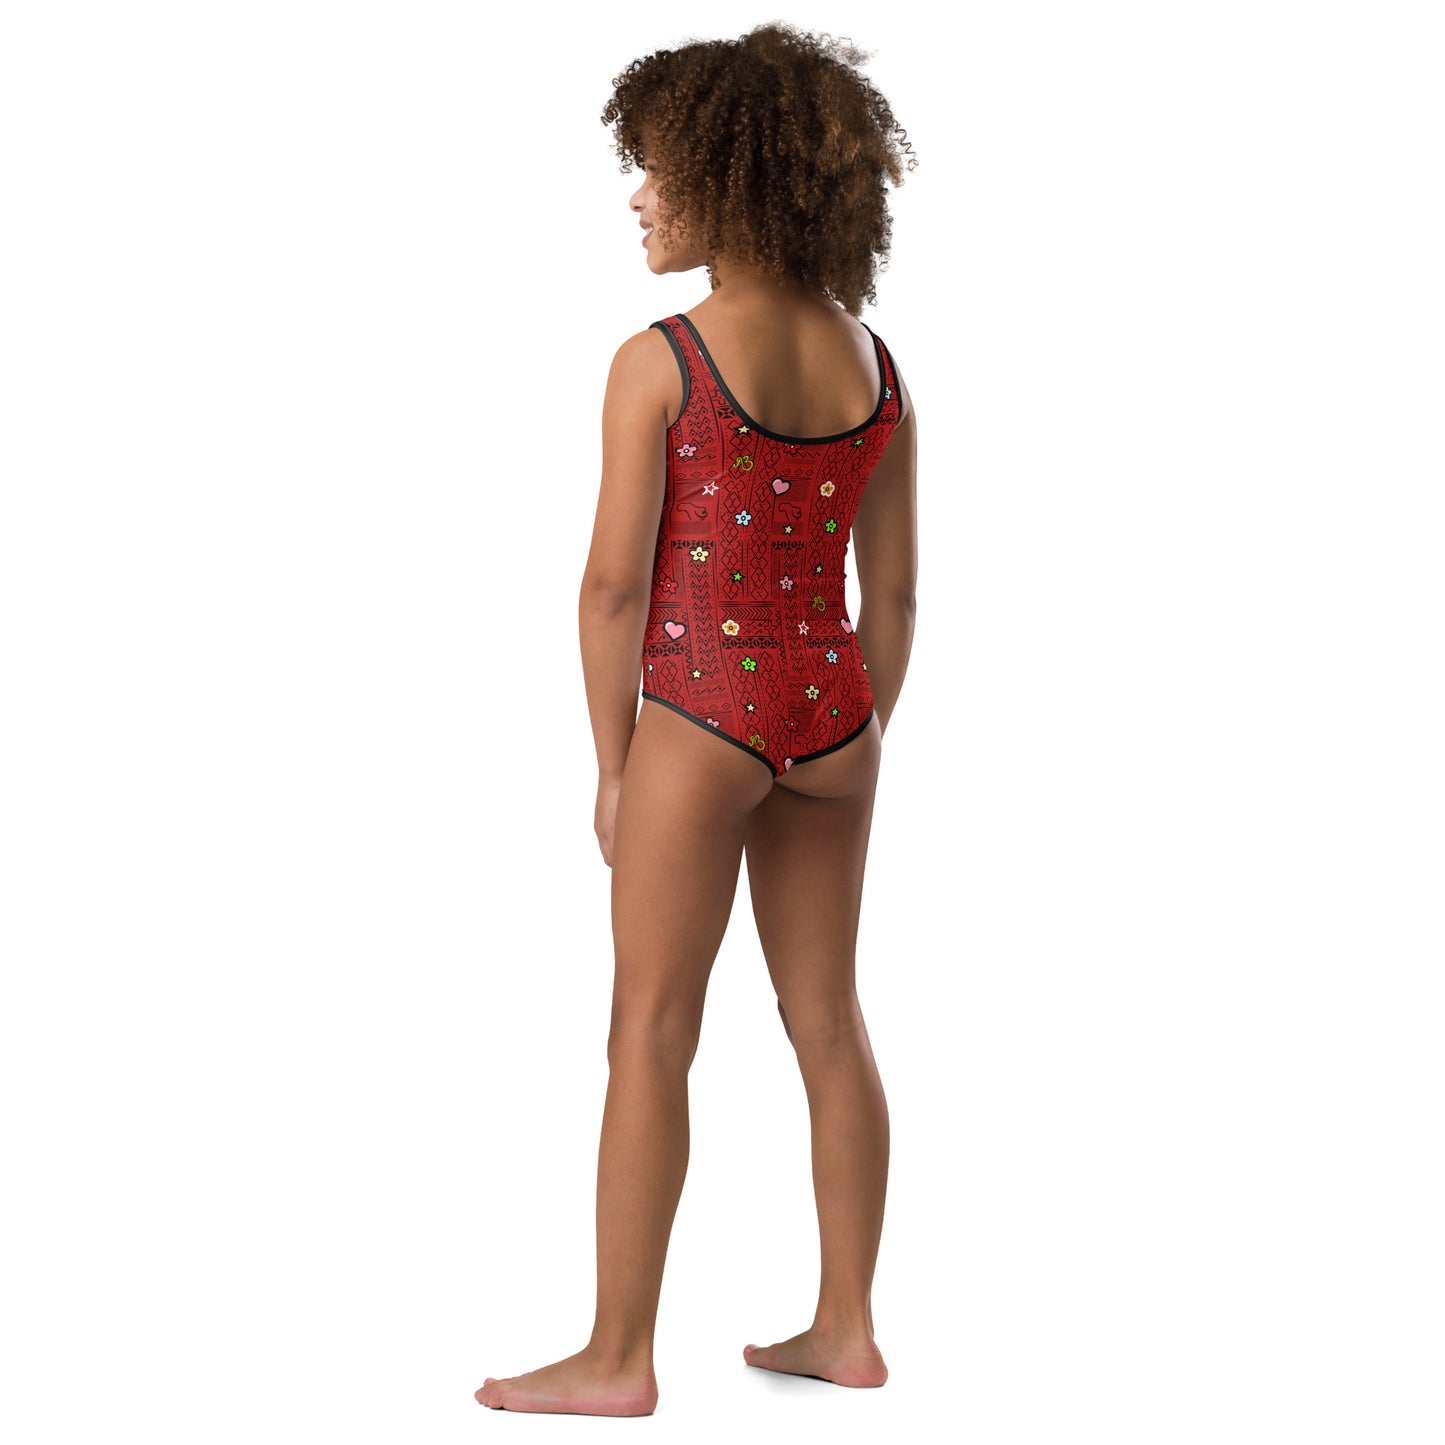 AfriBix Tribal Print Unicorn Girls Swimsuit - Red